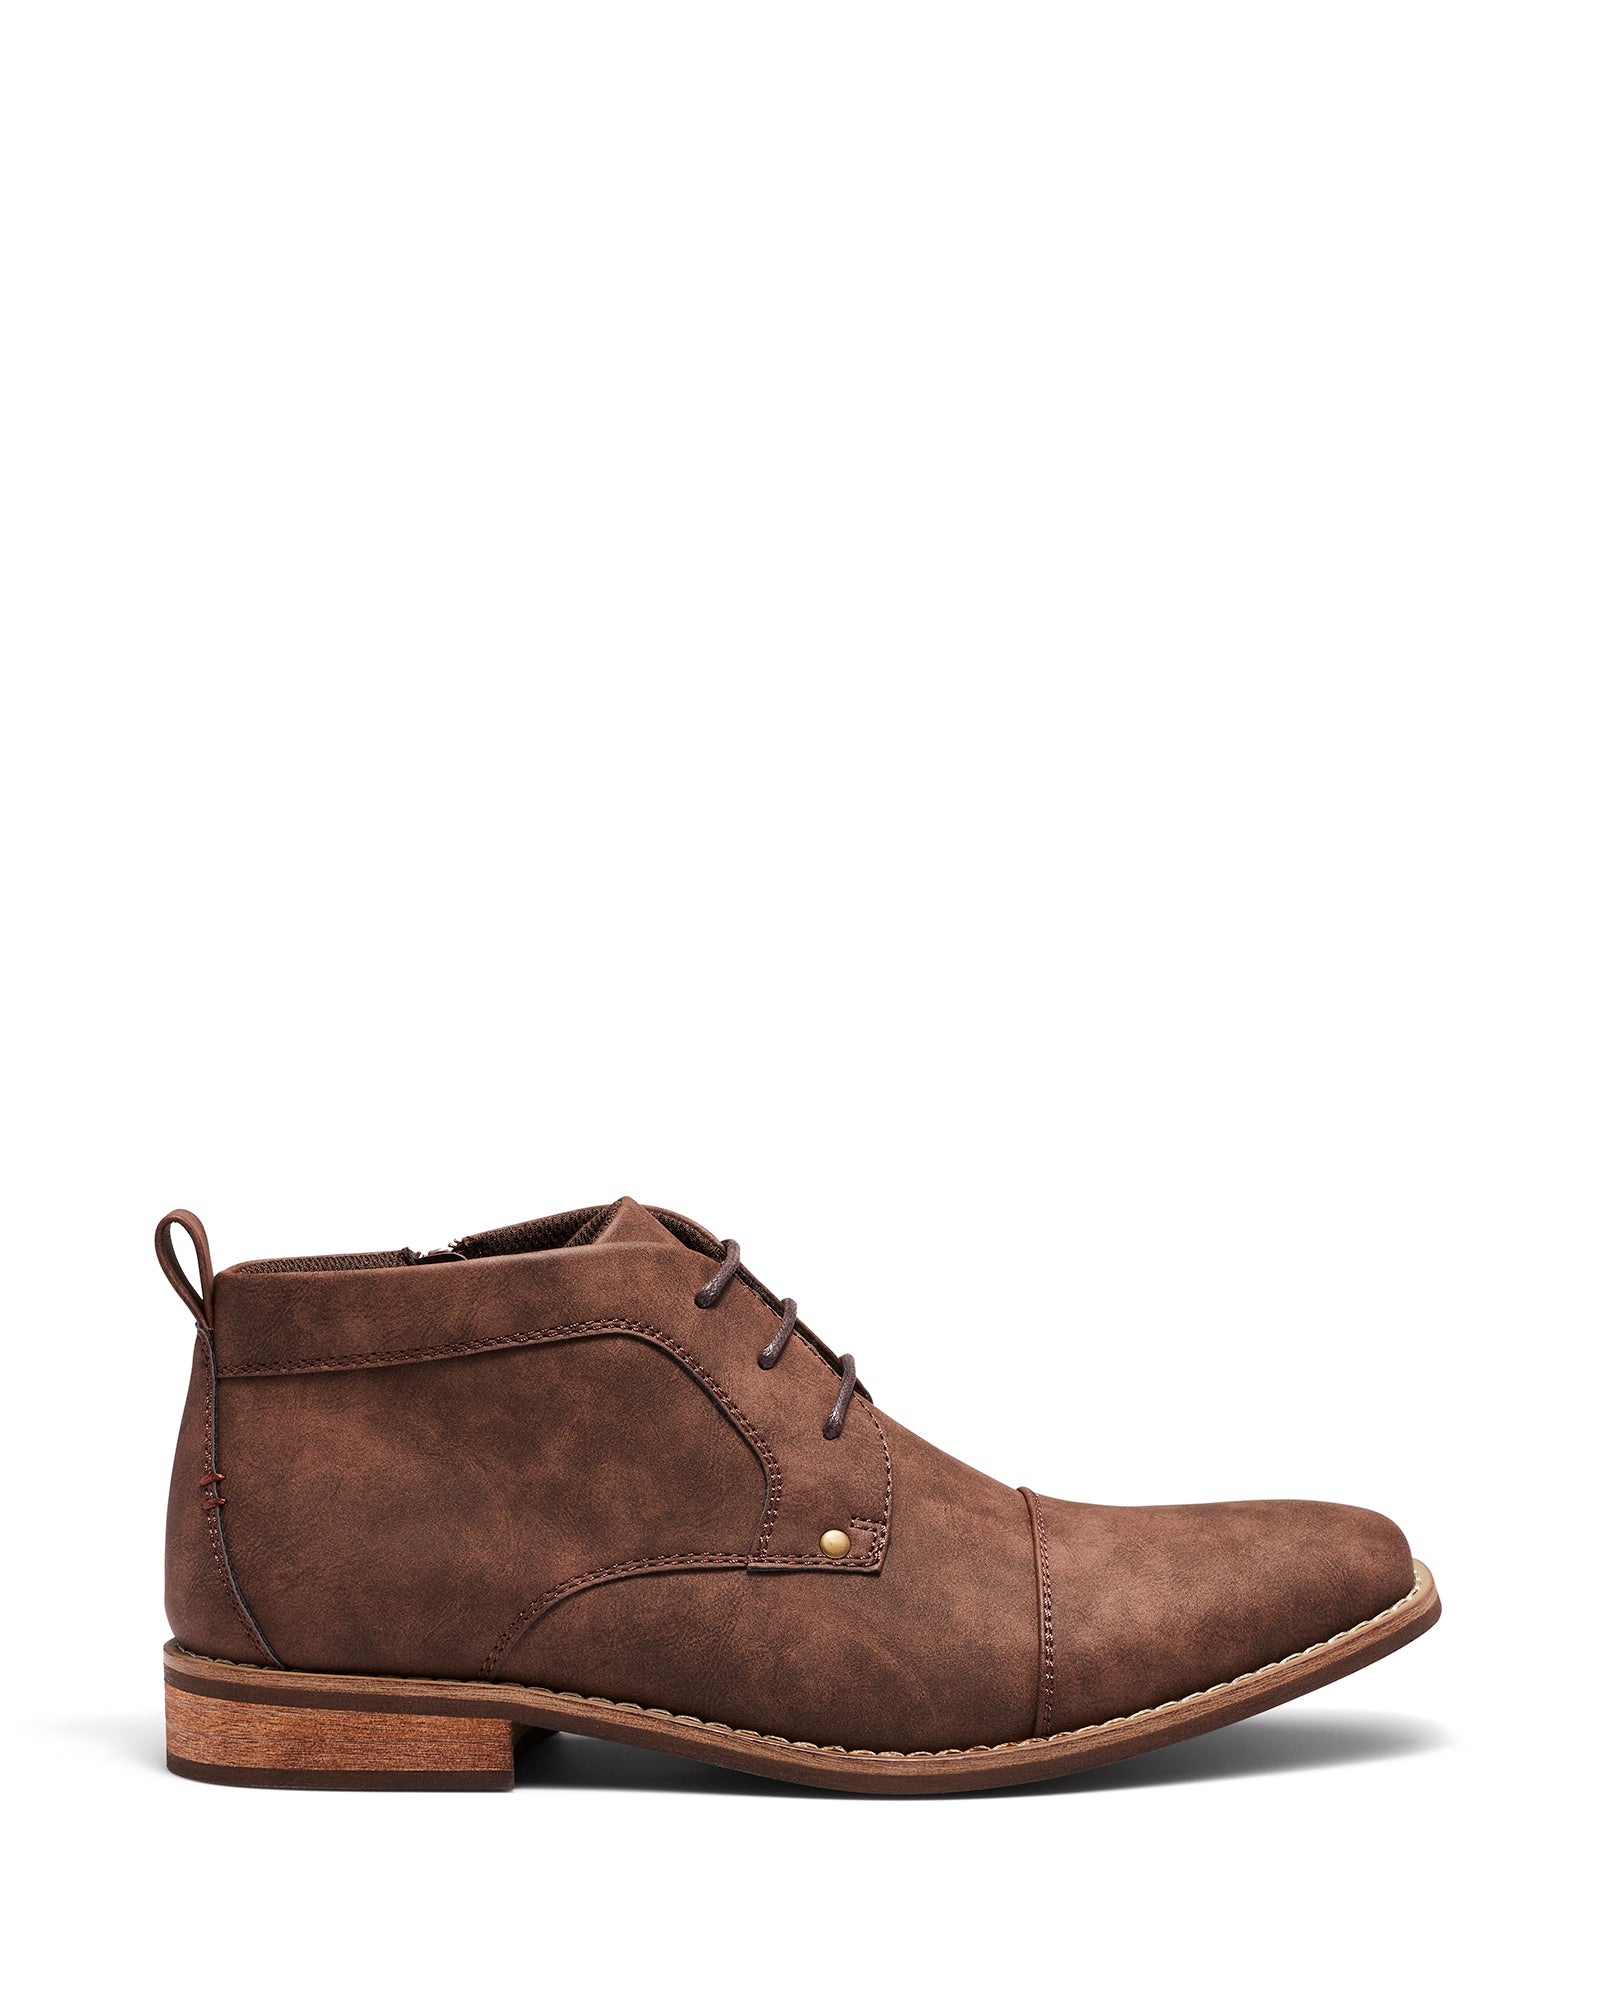 Uncut Shoes McQuillan Brown | Men's Boot | Desert Boot | Lace Up